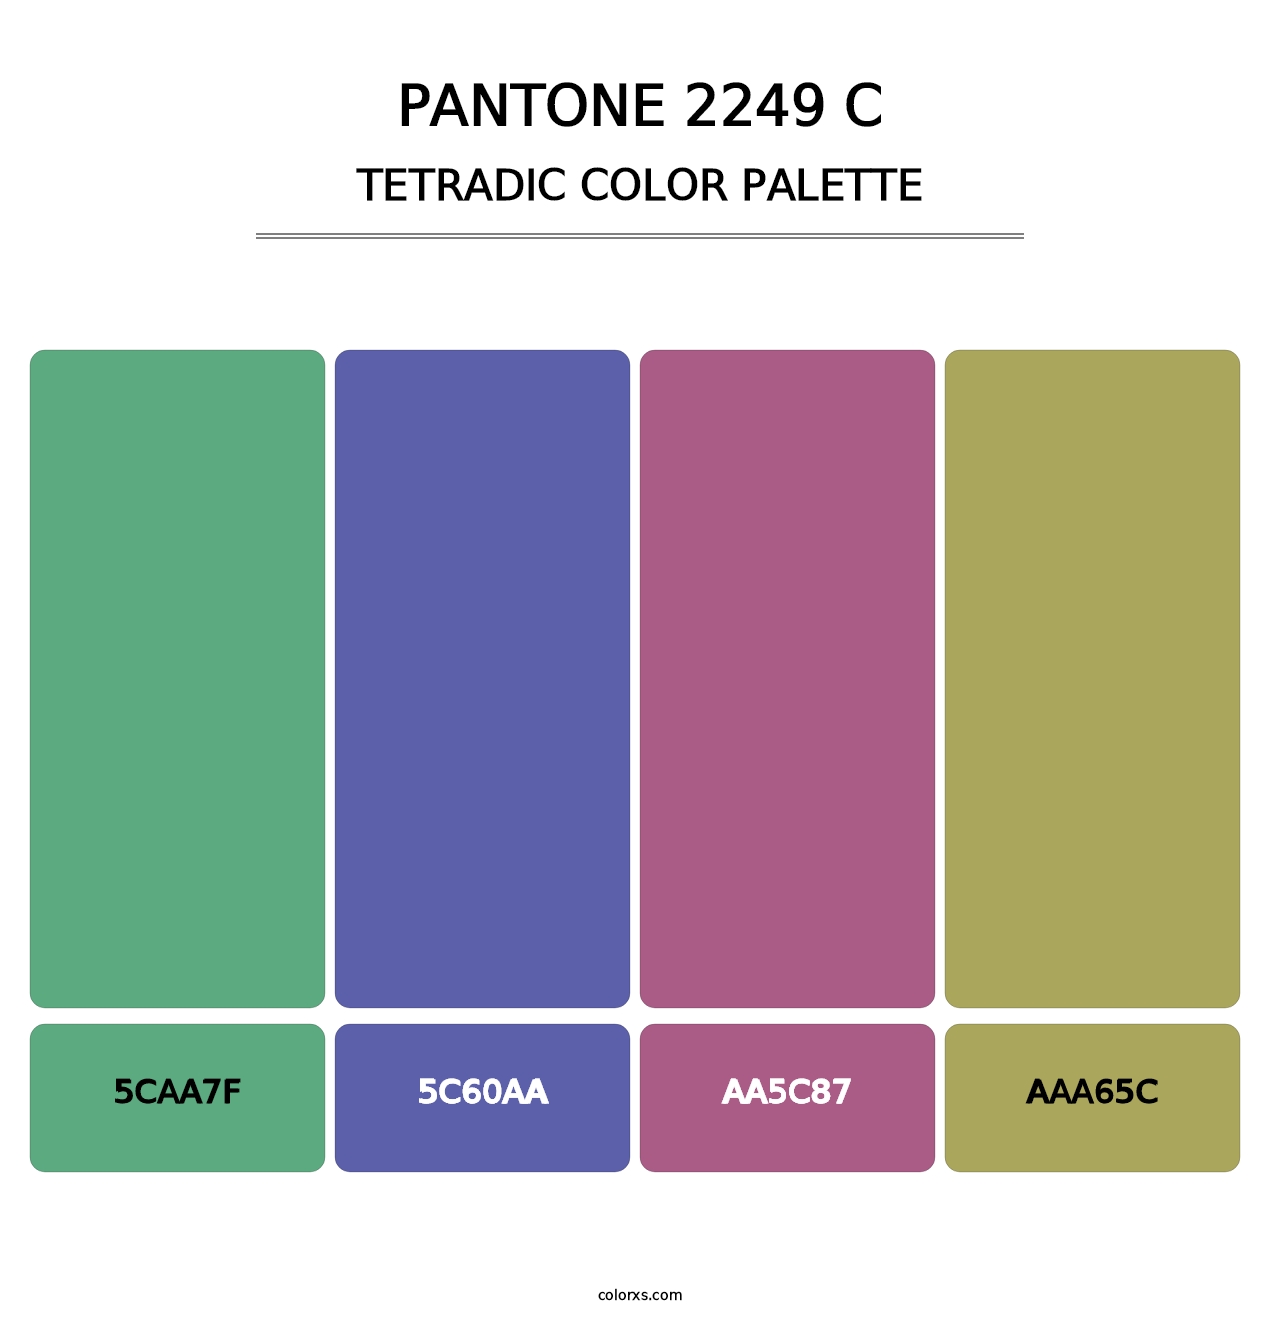 PANTONE 2249 C - Tetradic Color Palette